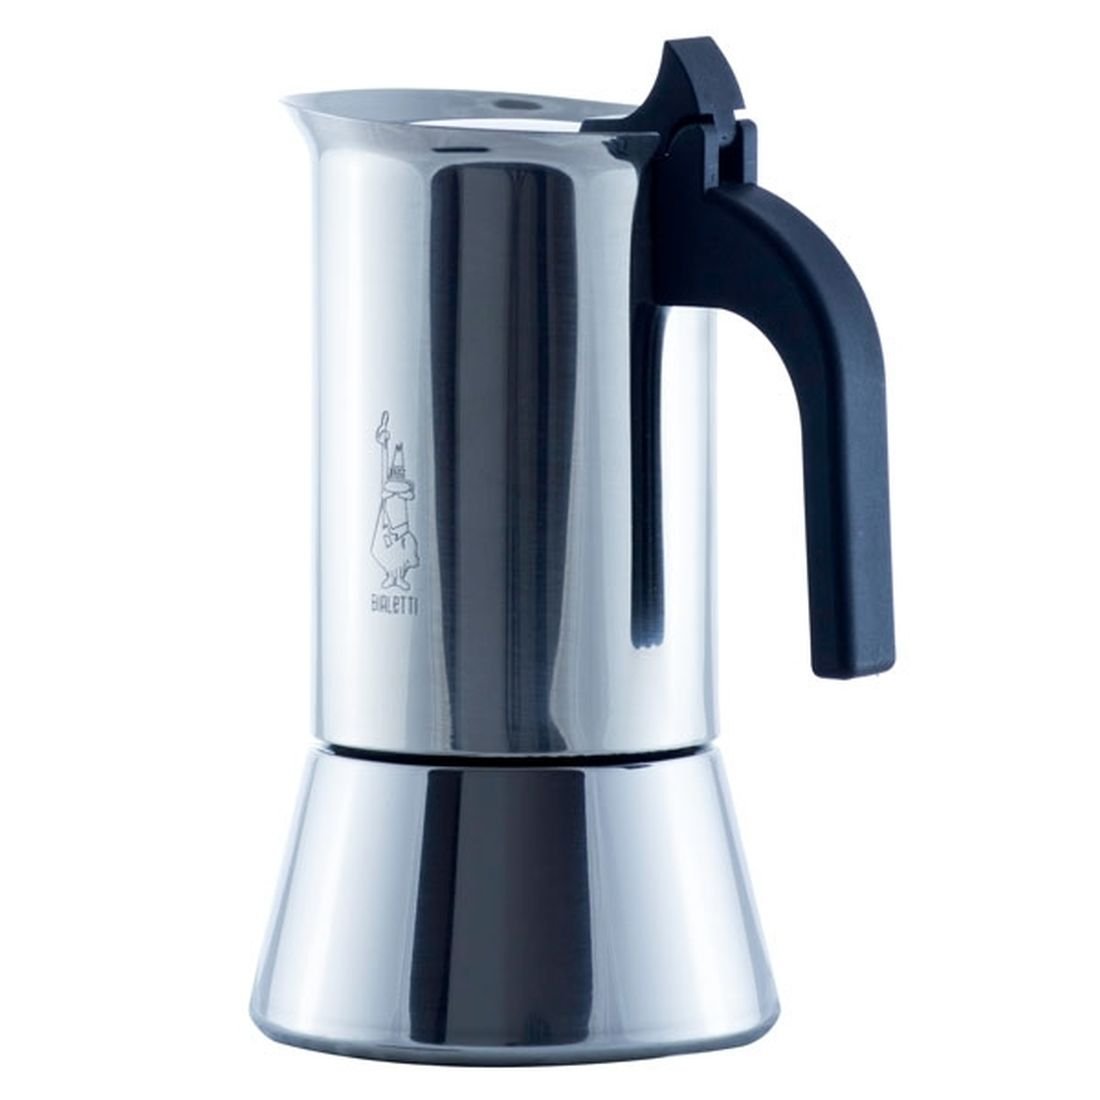 Bialetti Venus Stainless Steel Coffee Pot - Silver, 6 cup - Kroger